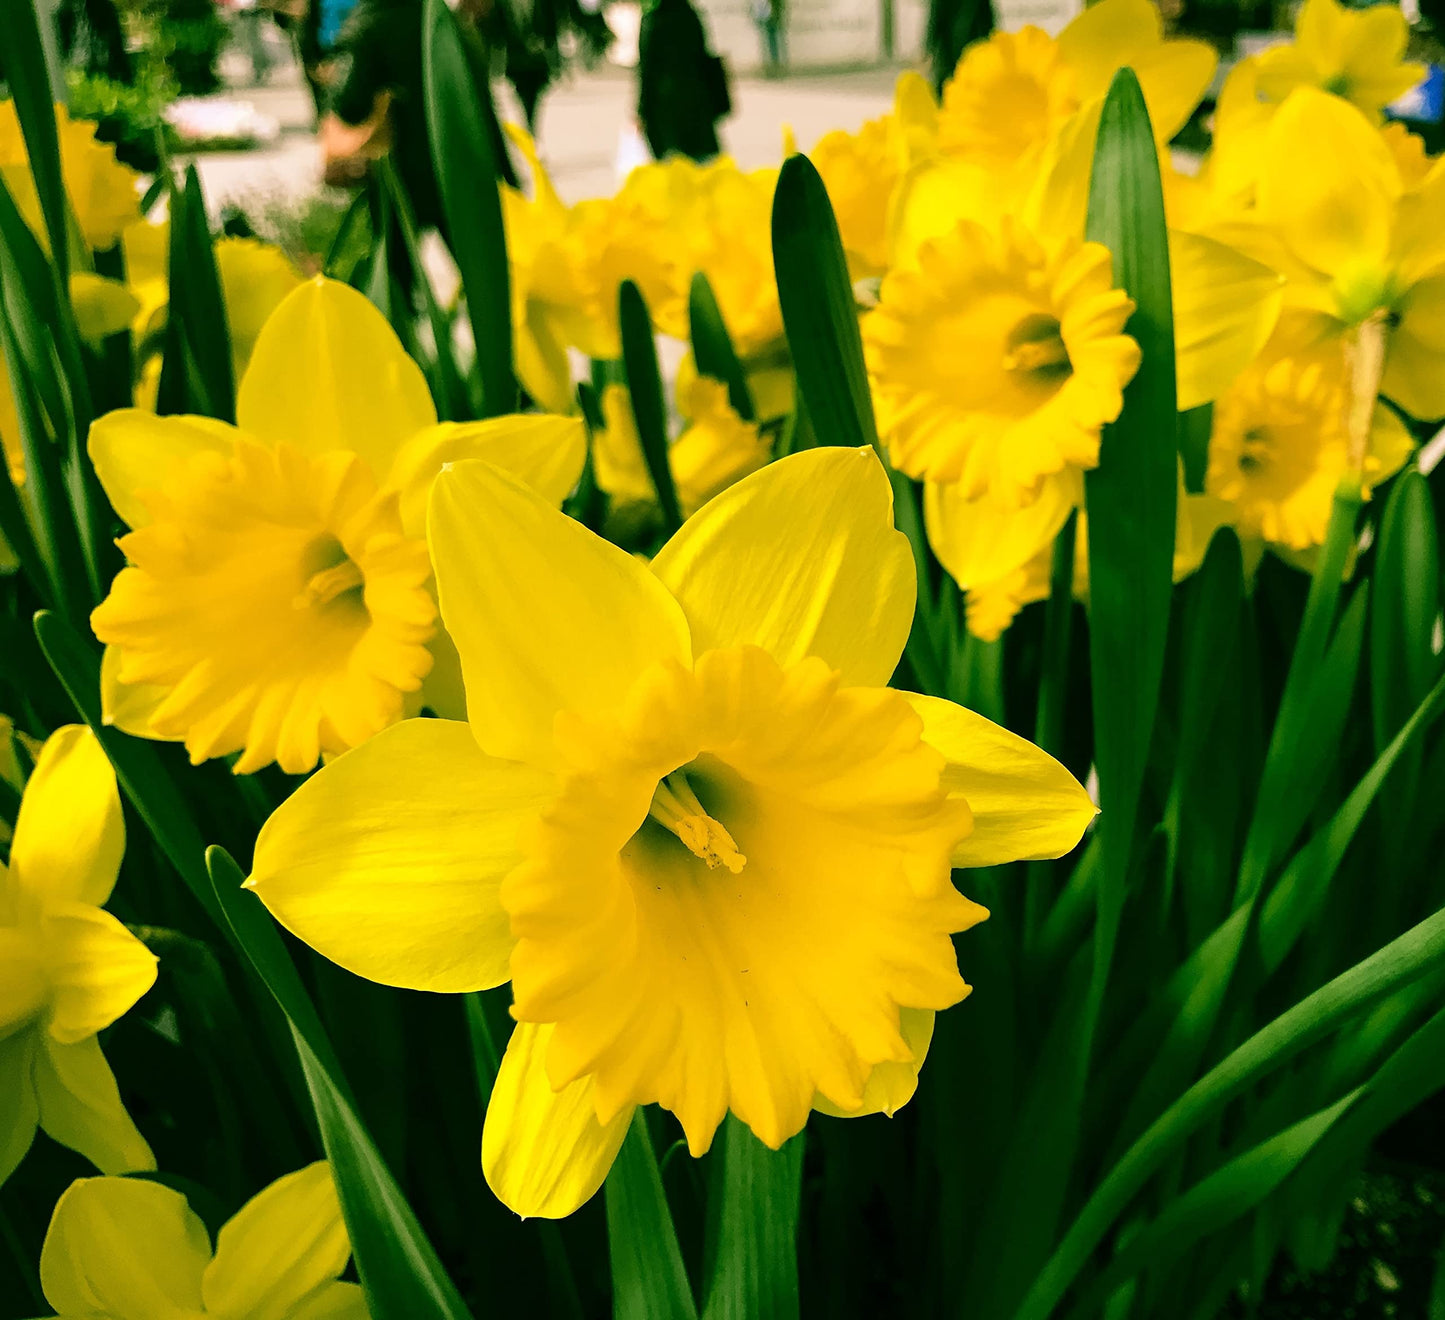 Daffodil 'Mixed Selection' - 10 x Premium Bulb Pack